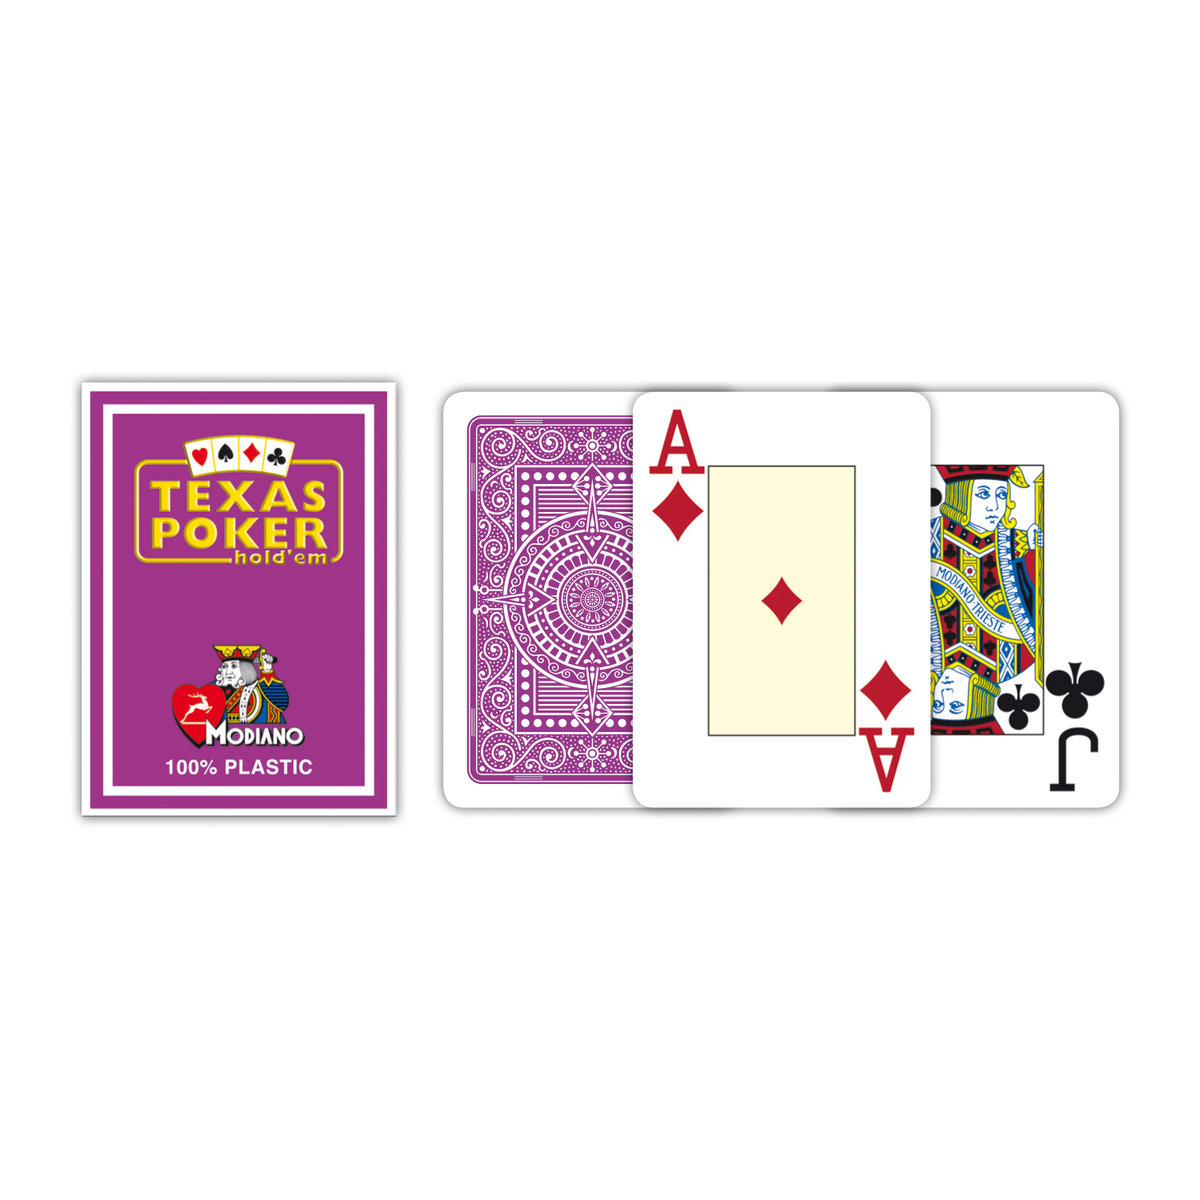 Modiano, karty Texas Poker Jumbo Index Plastic, fioletowy